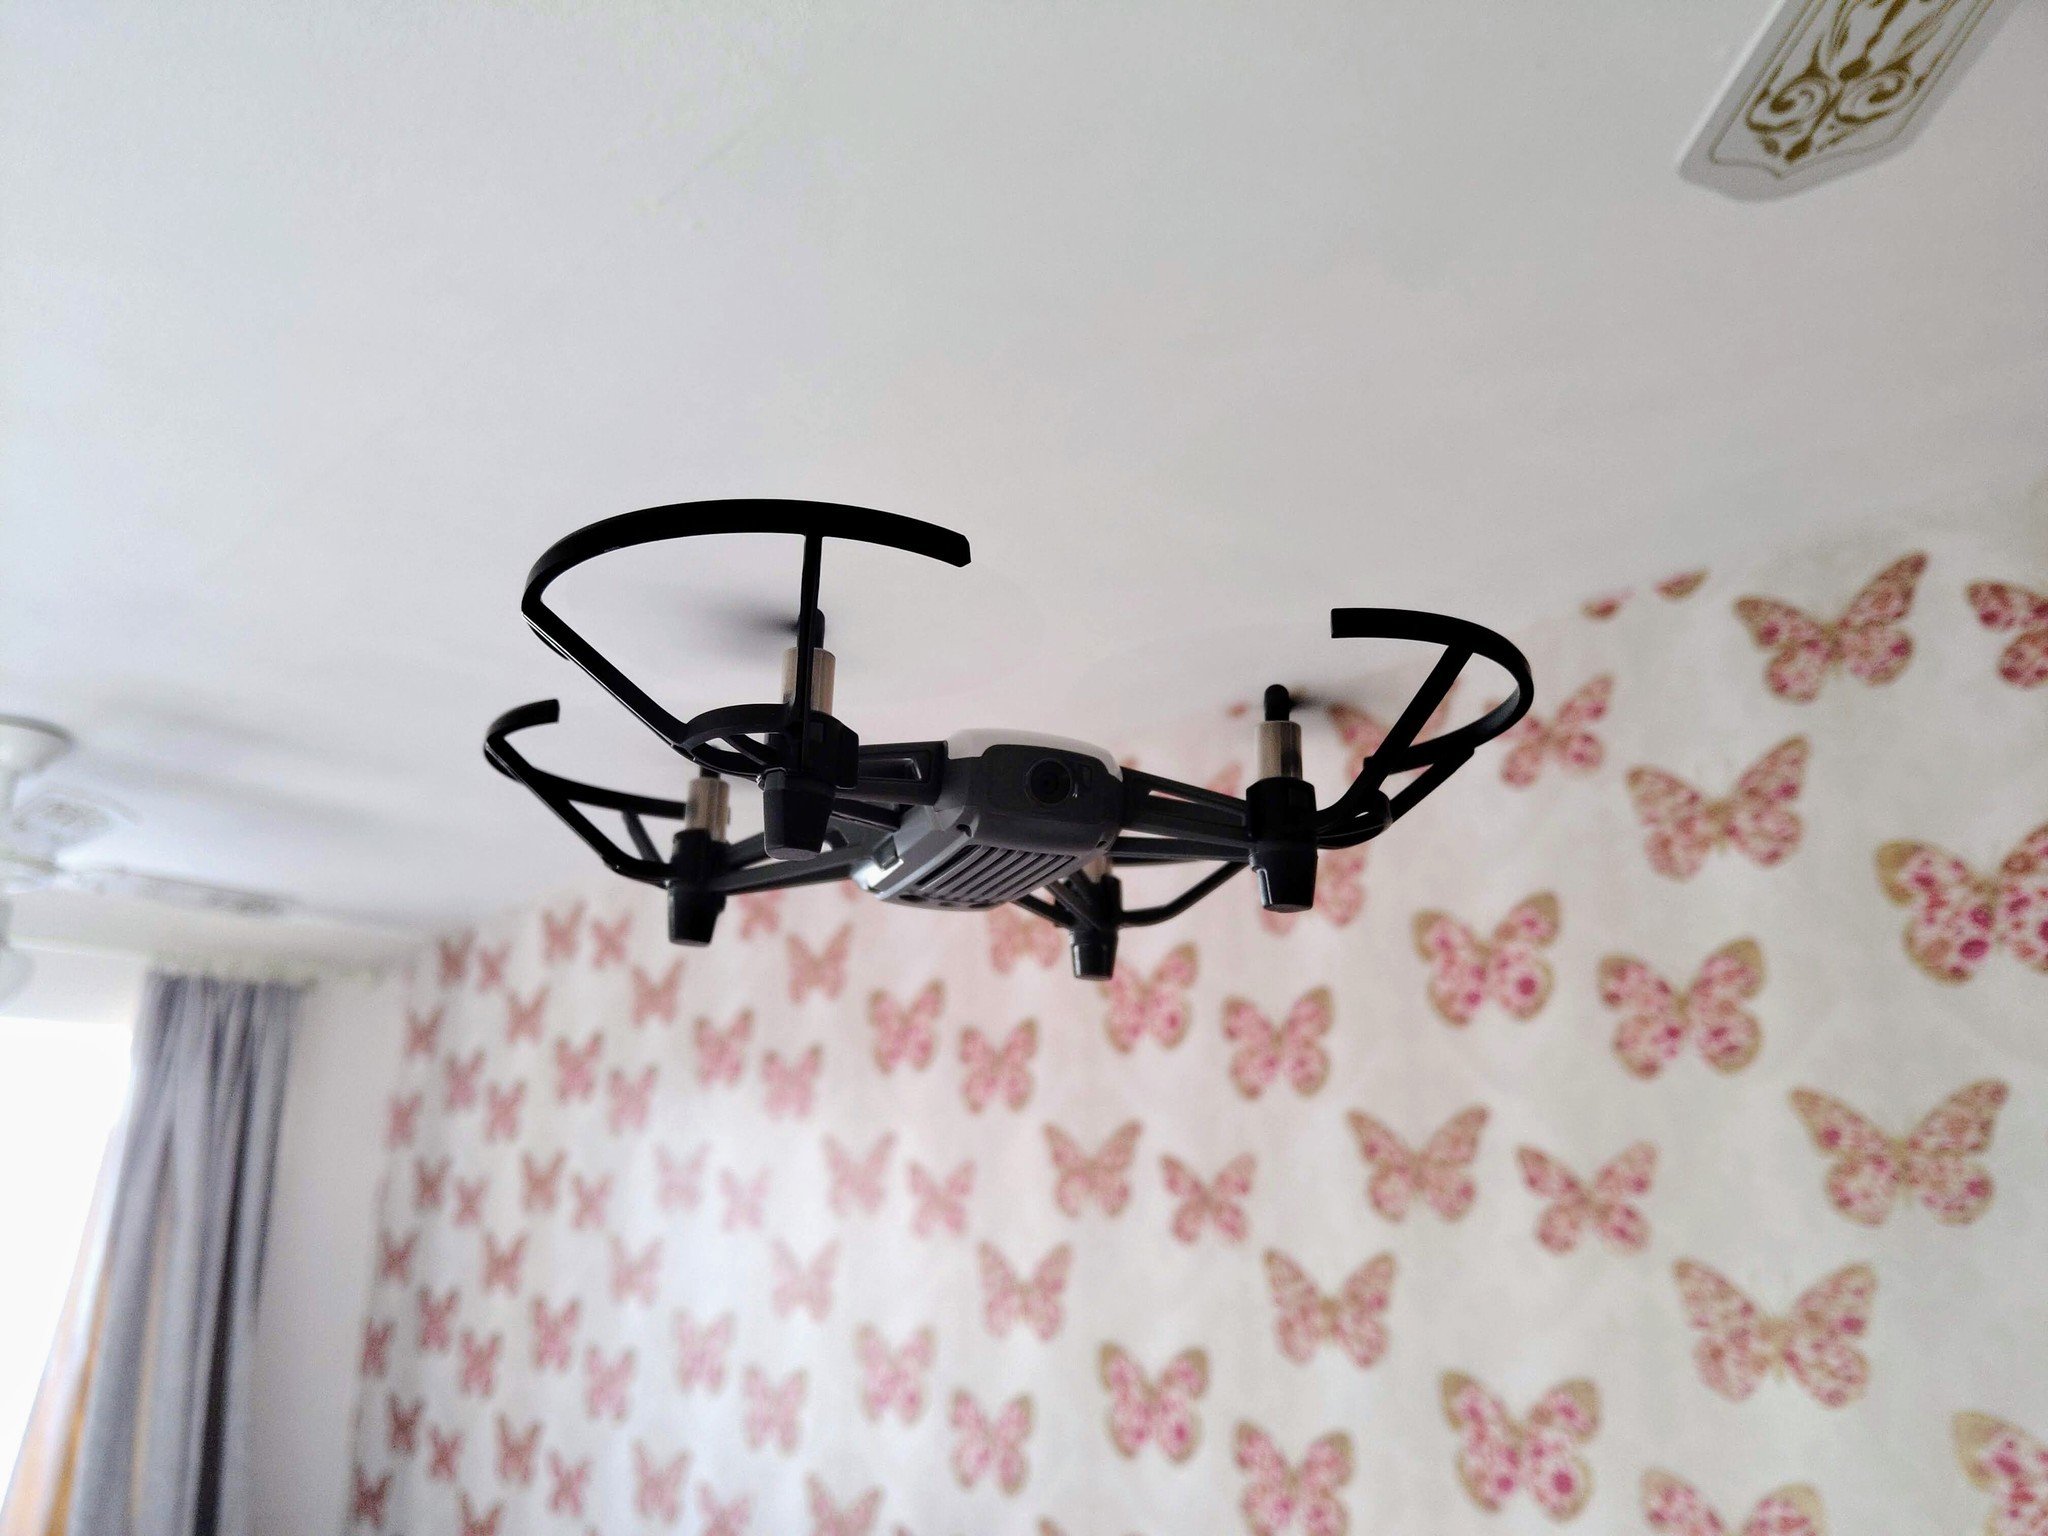 flying tello drone